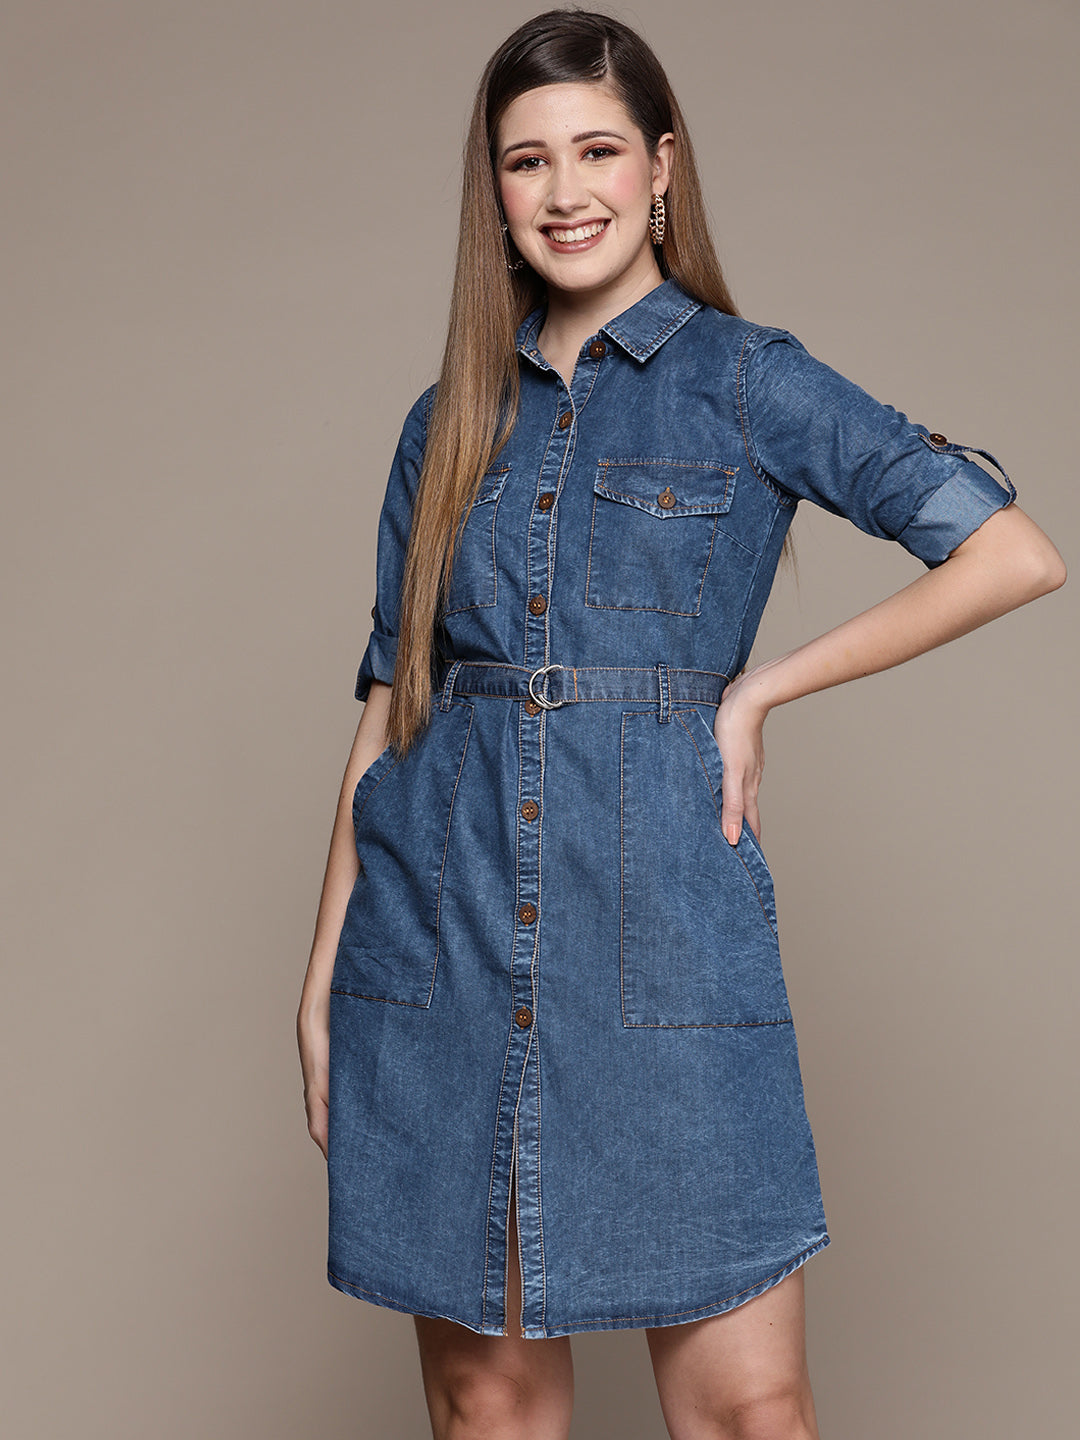 Ishin Women's Blue Denim Shirt Style Dress